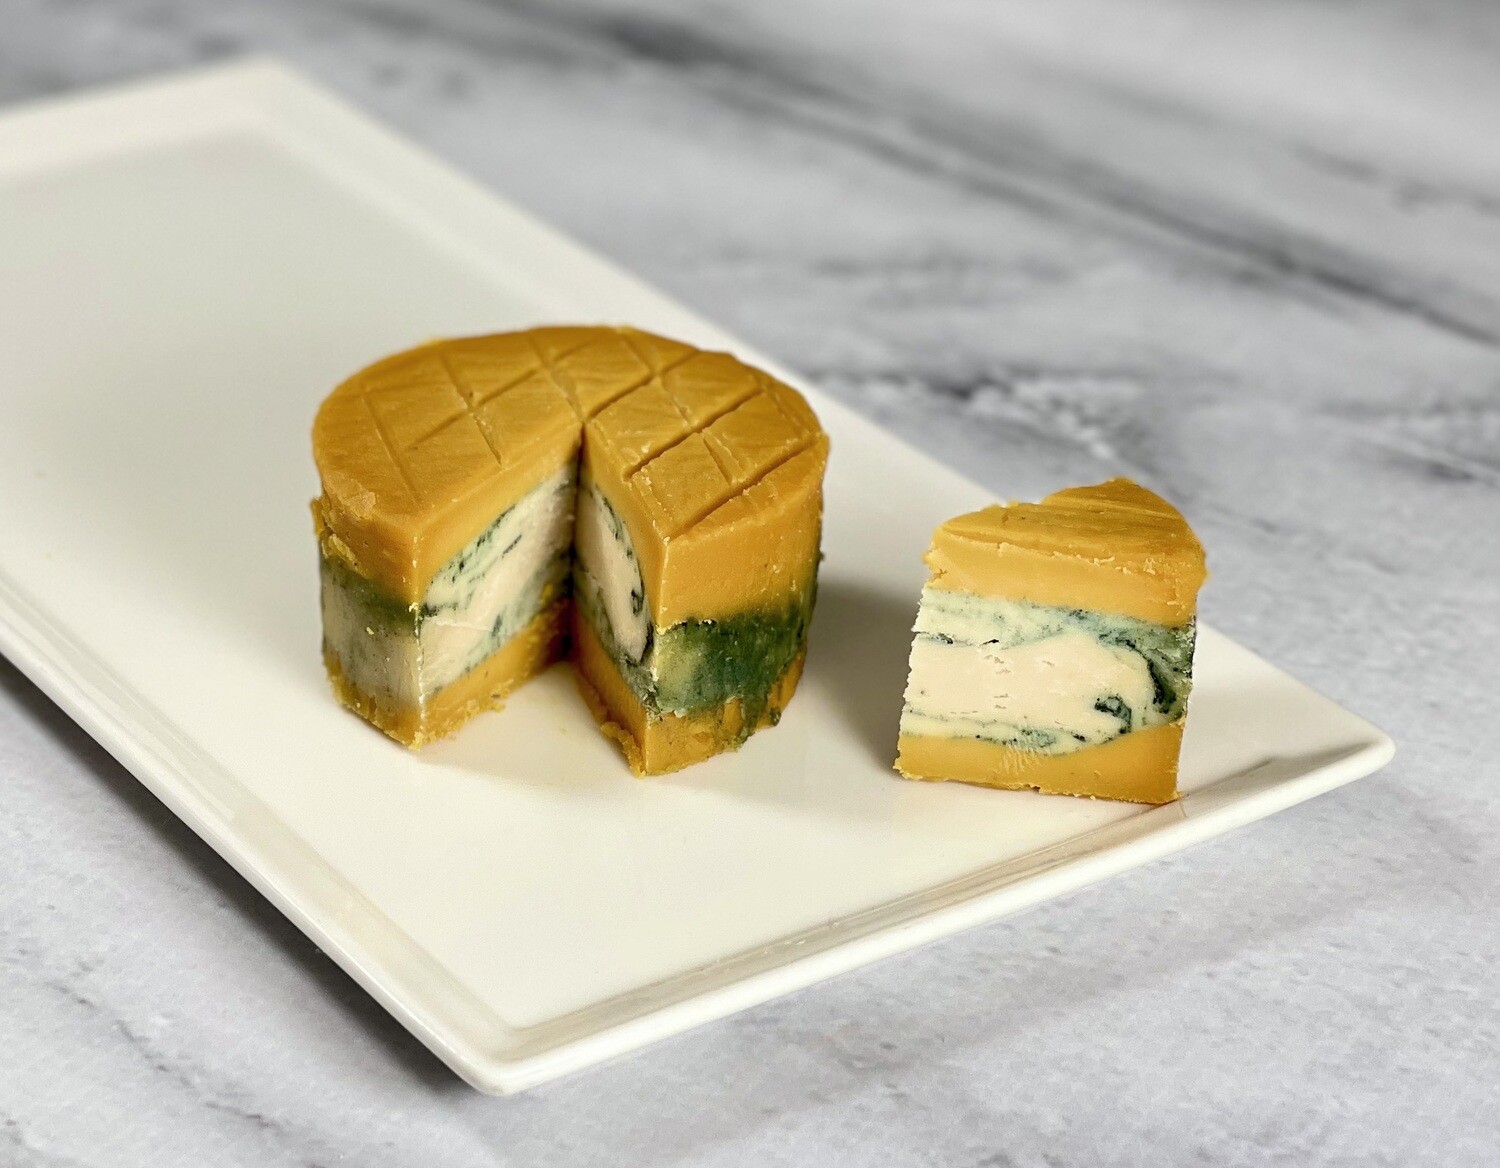 THE PLANTSMAN limited release layered Spirulina & Sharp Cheddar Vegan Cheese